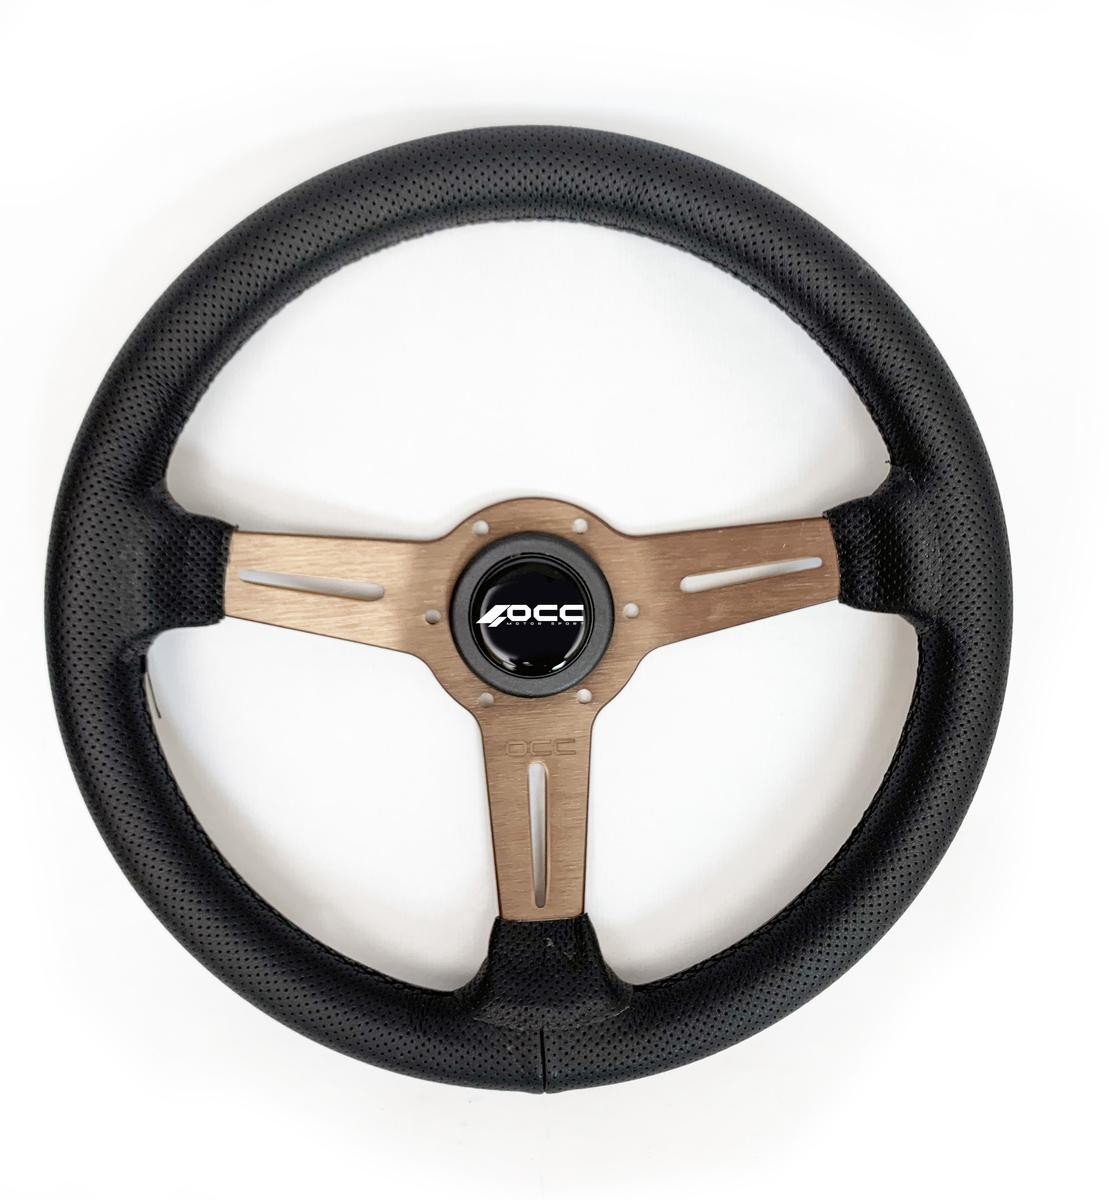 Ford FOCUS Sports steering wheel Occ Motorsport OCCVOL009 cheap